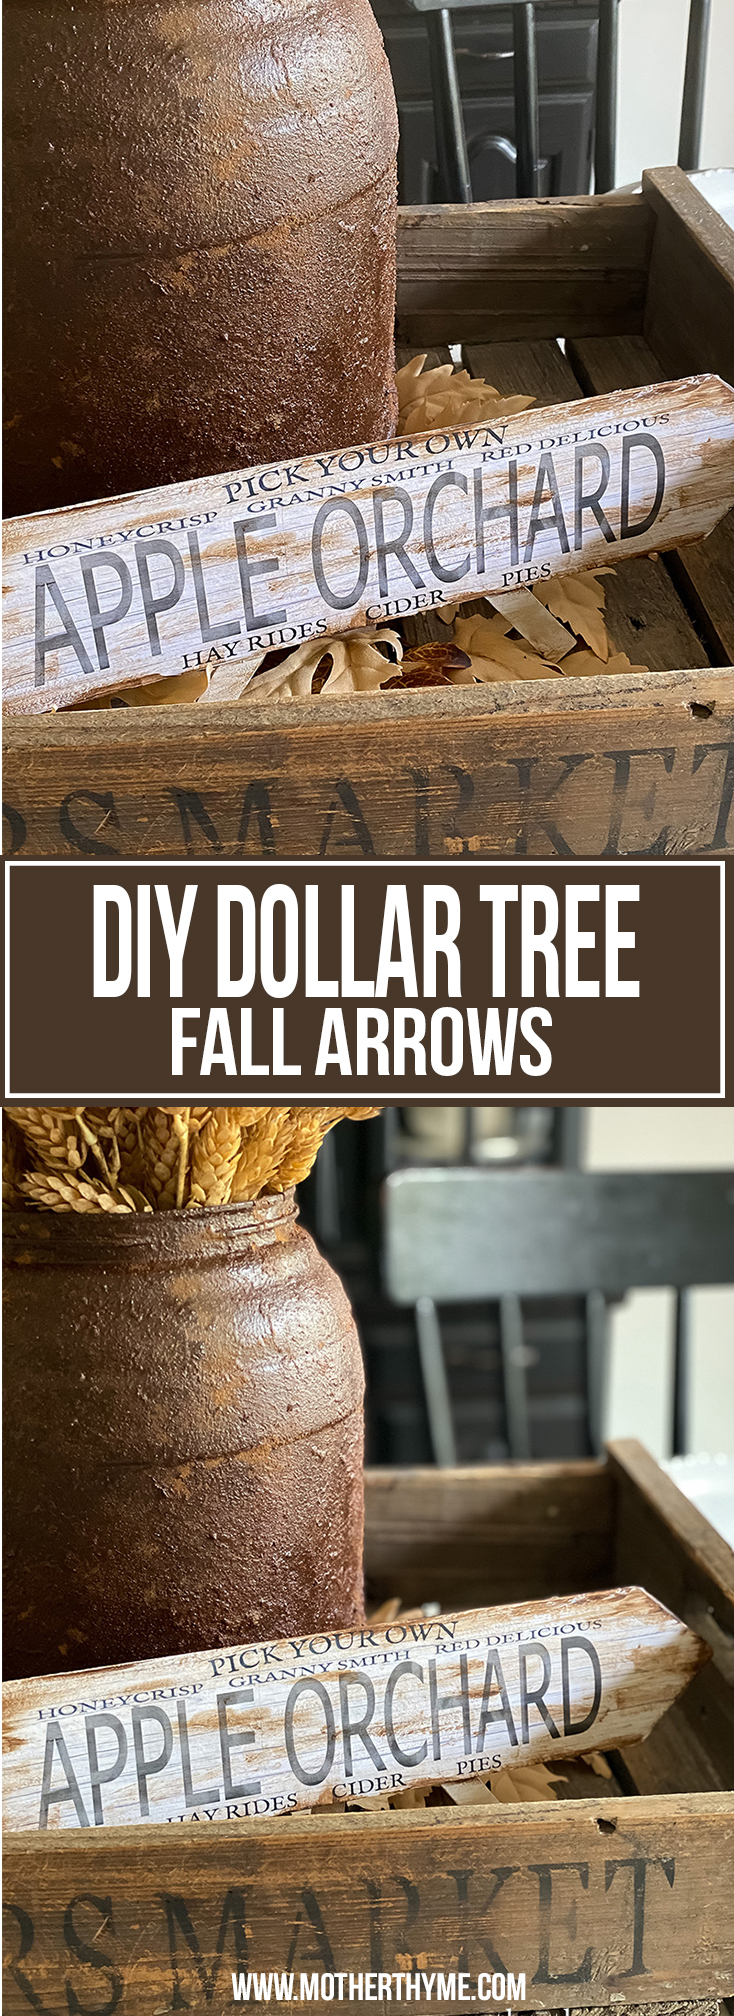 DIY DOLLAR TREE FALL ARROWS